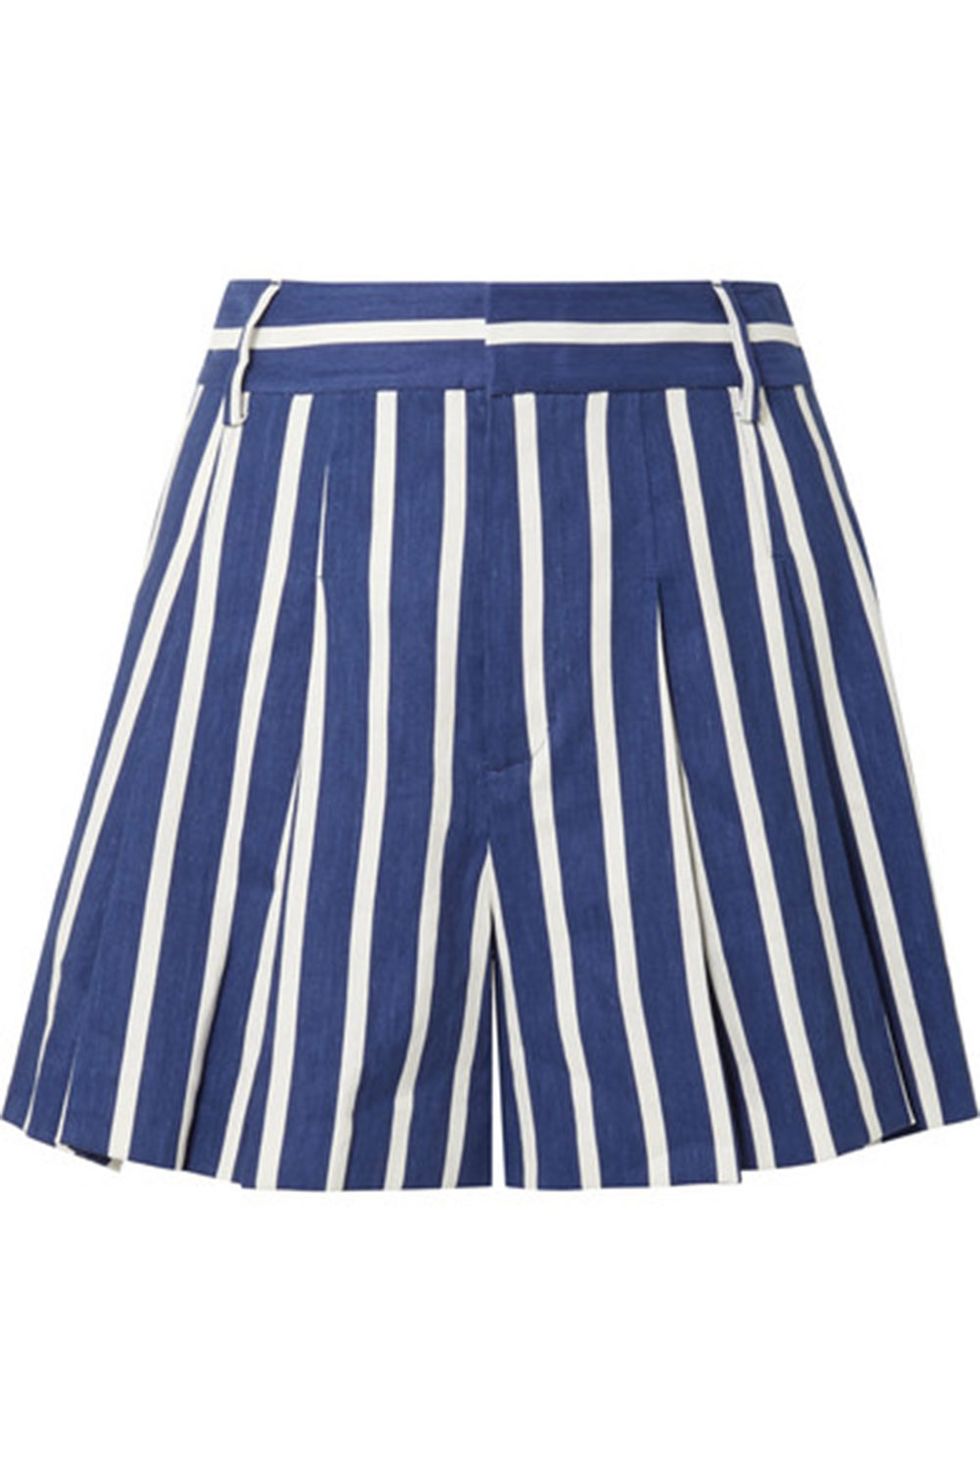 Clothing, Blue, Fashion, A-line, Shorts, Electric blue, Skort, Tennis skirt, Waist, Cheerleading uniform, 